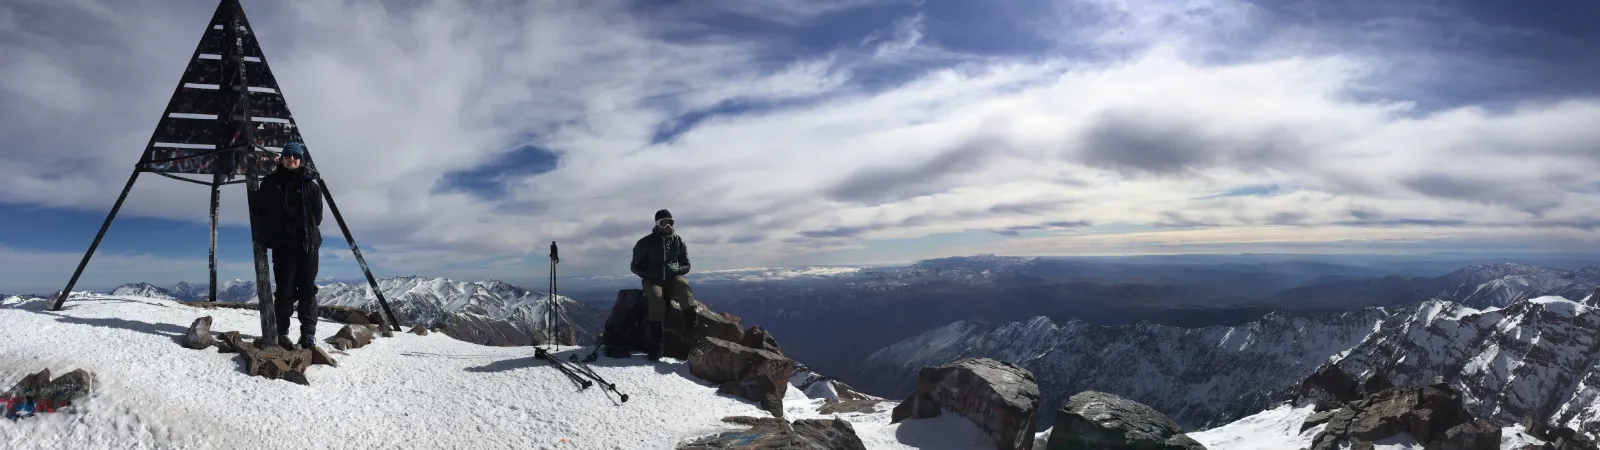 Toubkal Winter Climb - 2 days Trek